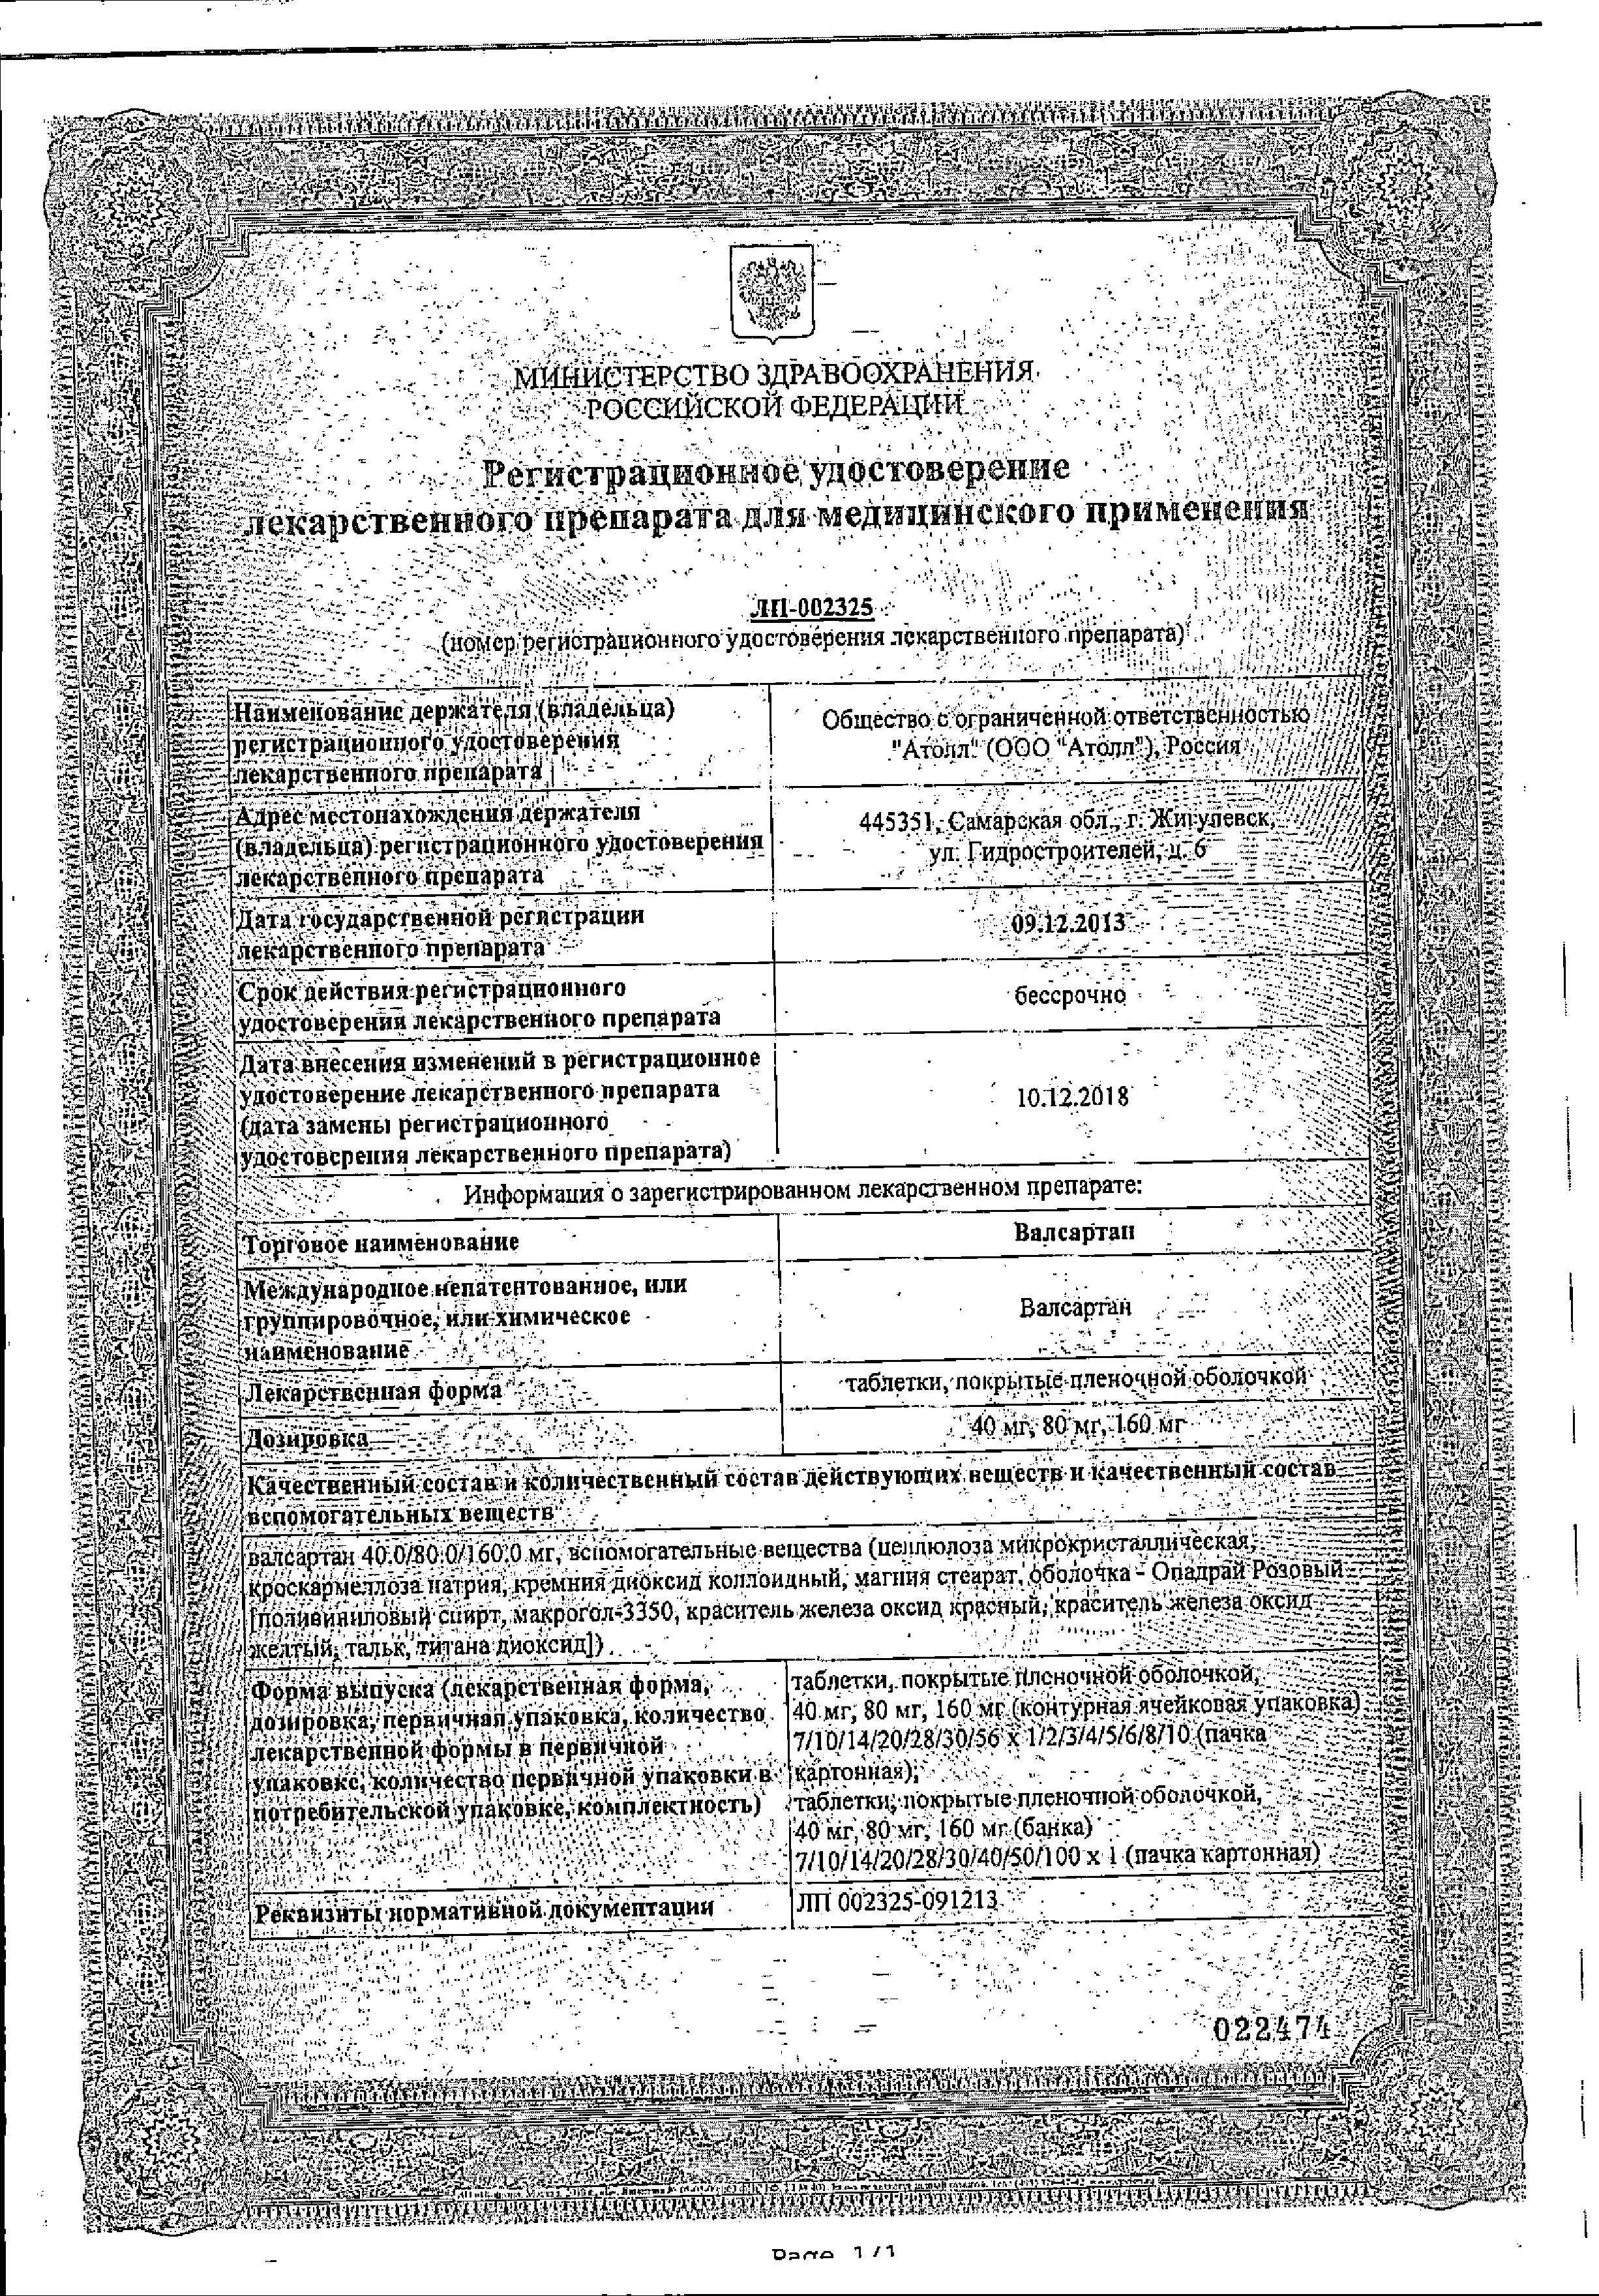 Валсартан сертификат